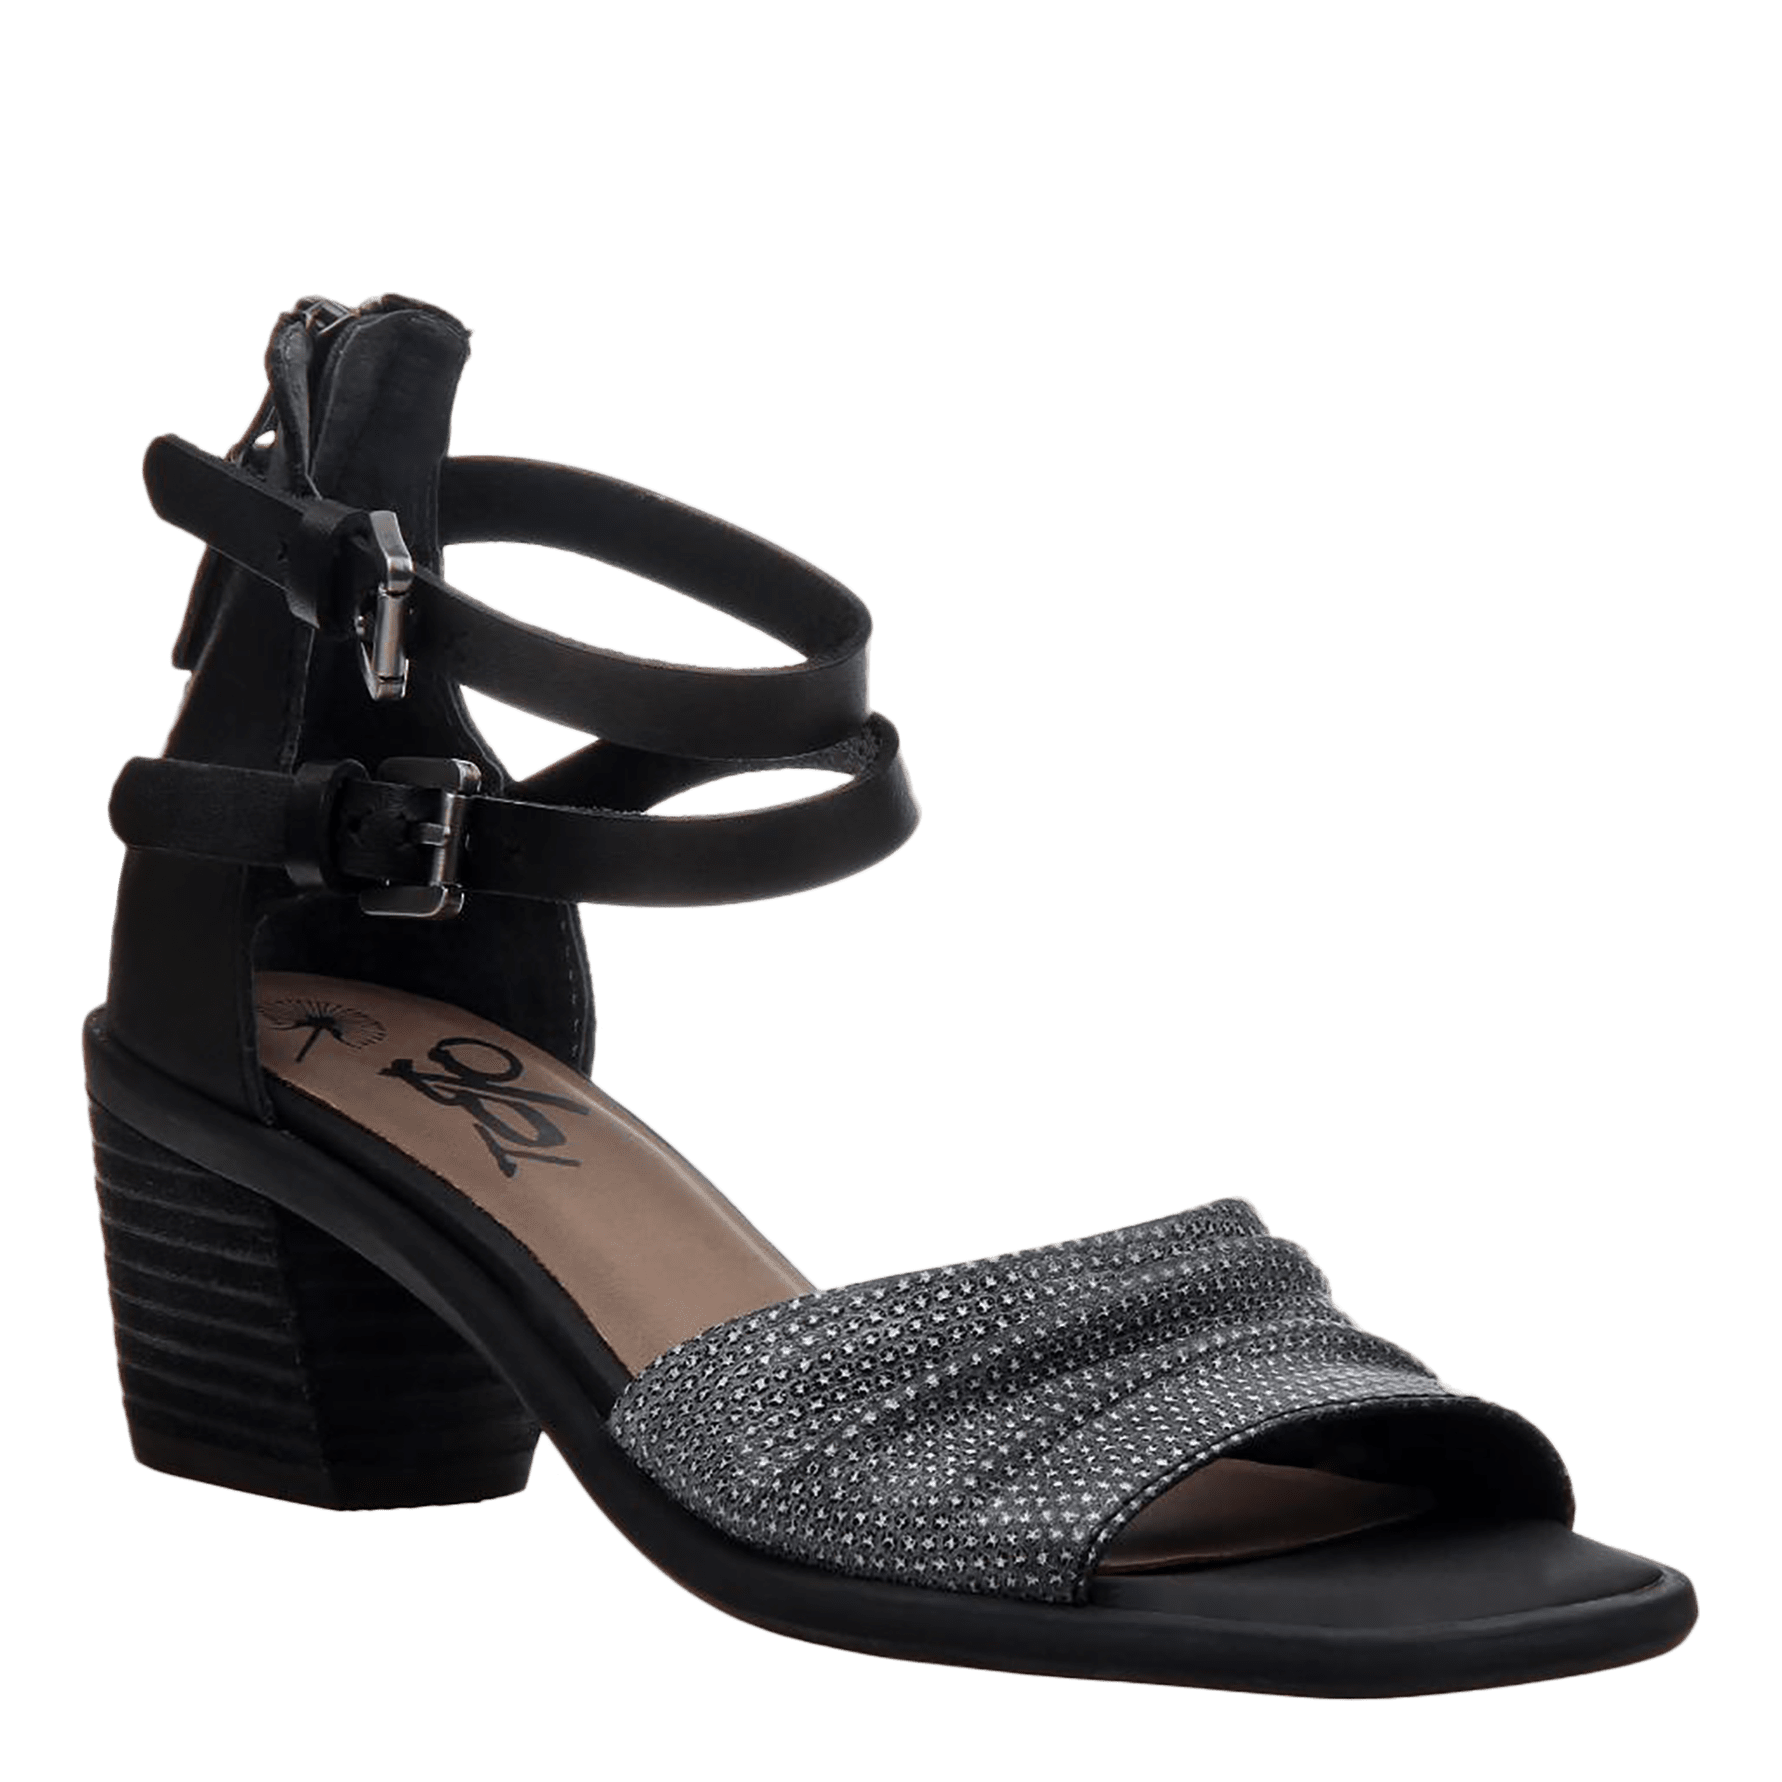 womens grey heeled sandals